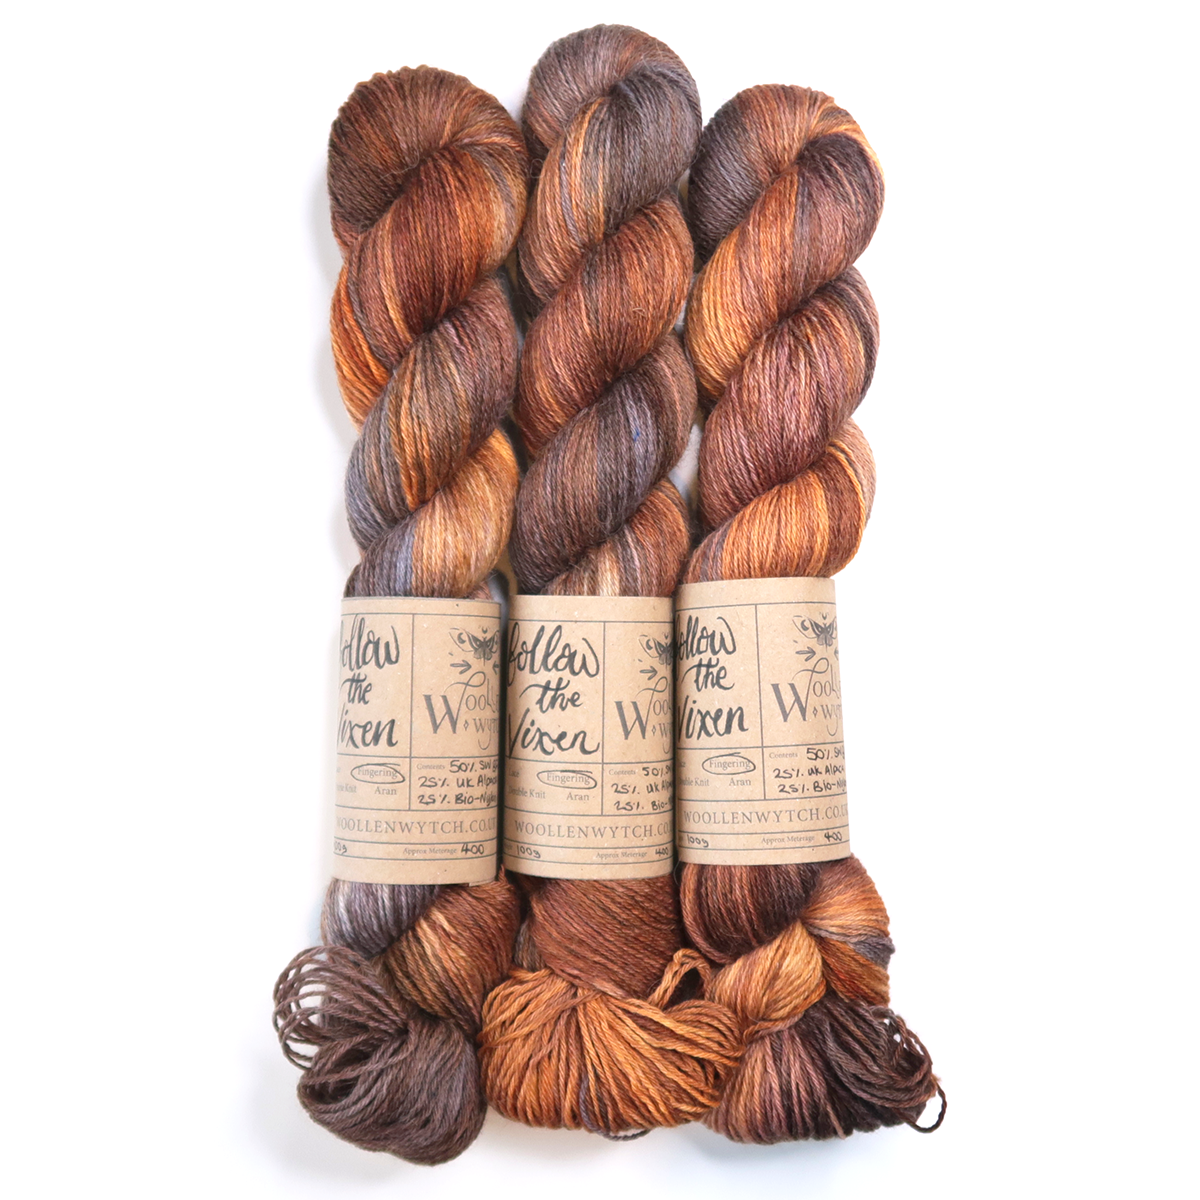 Hand dyed yarn using British wool by Woollen wytch in bristol uk follow the vixen